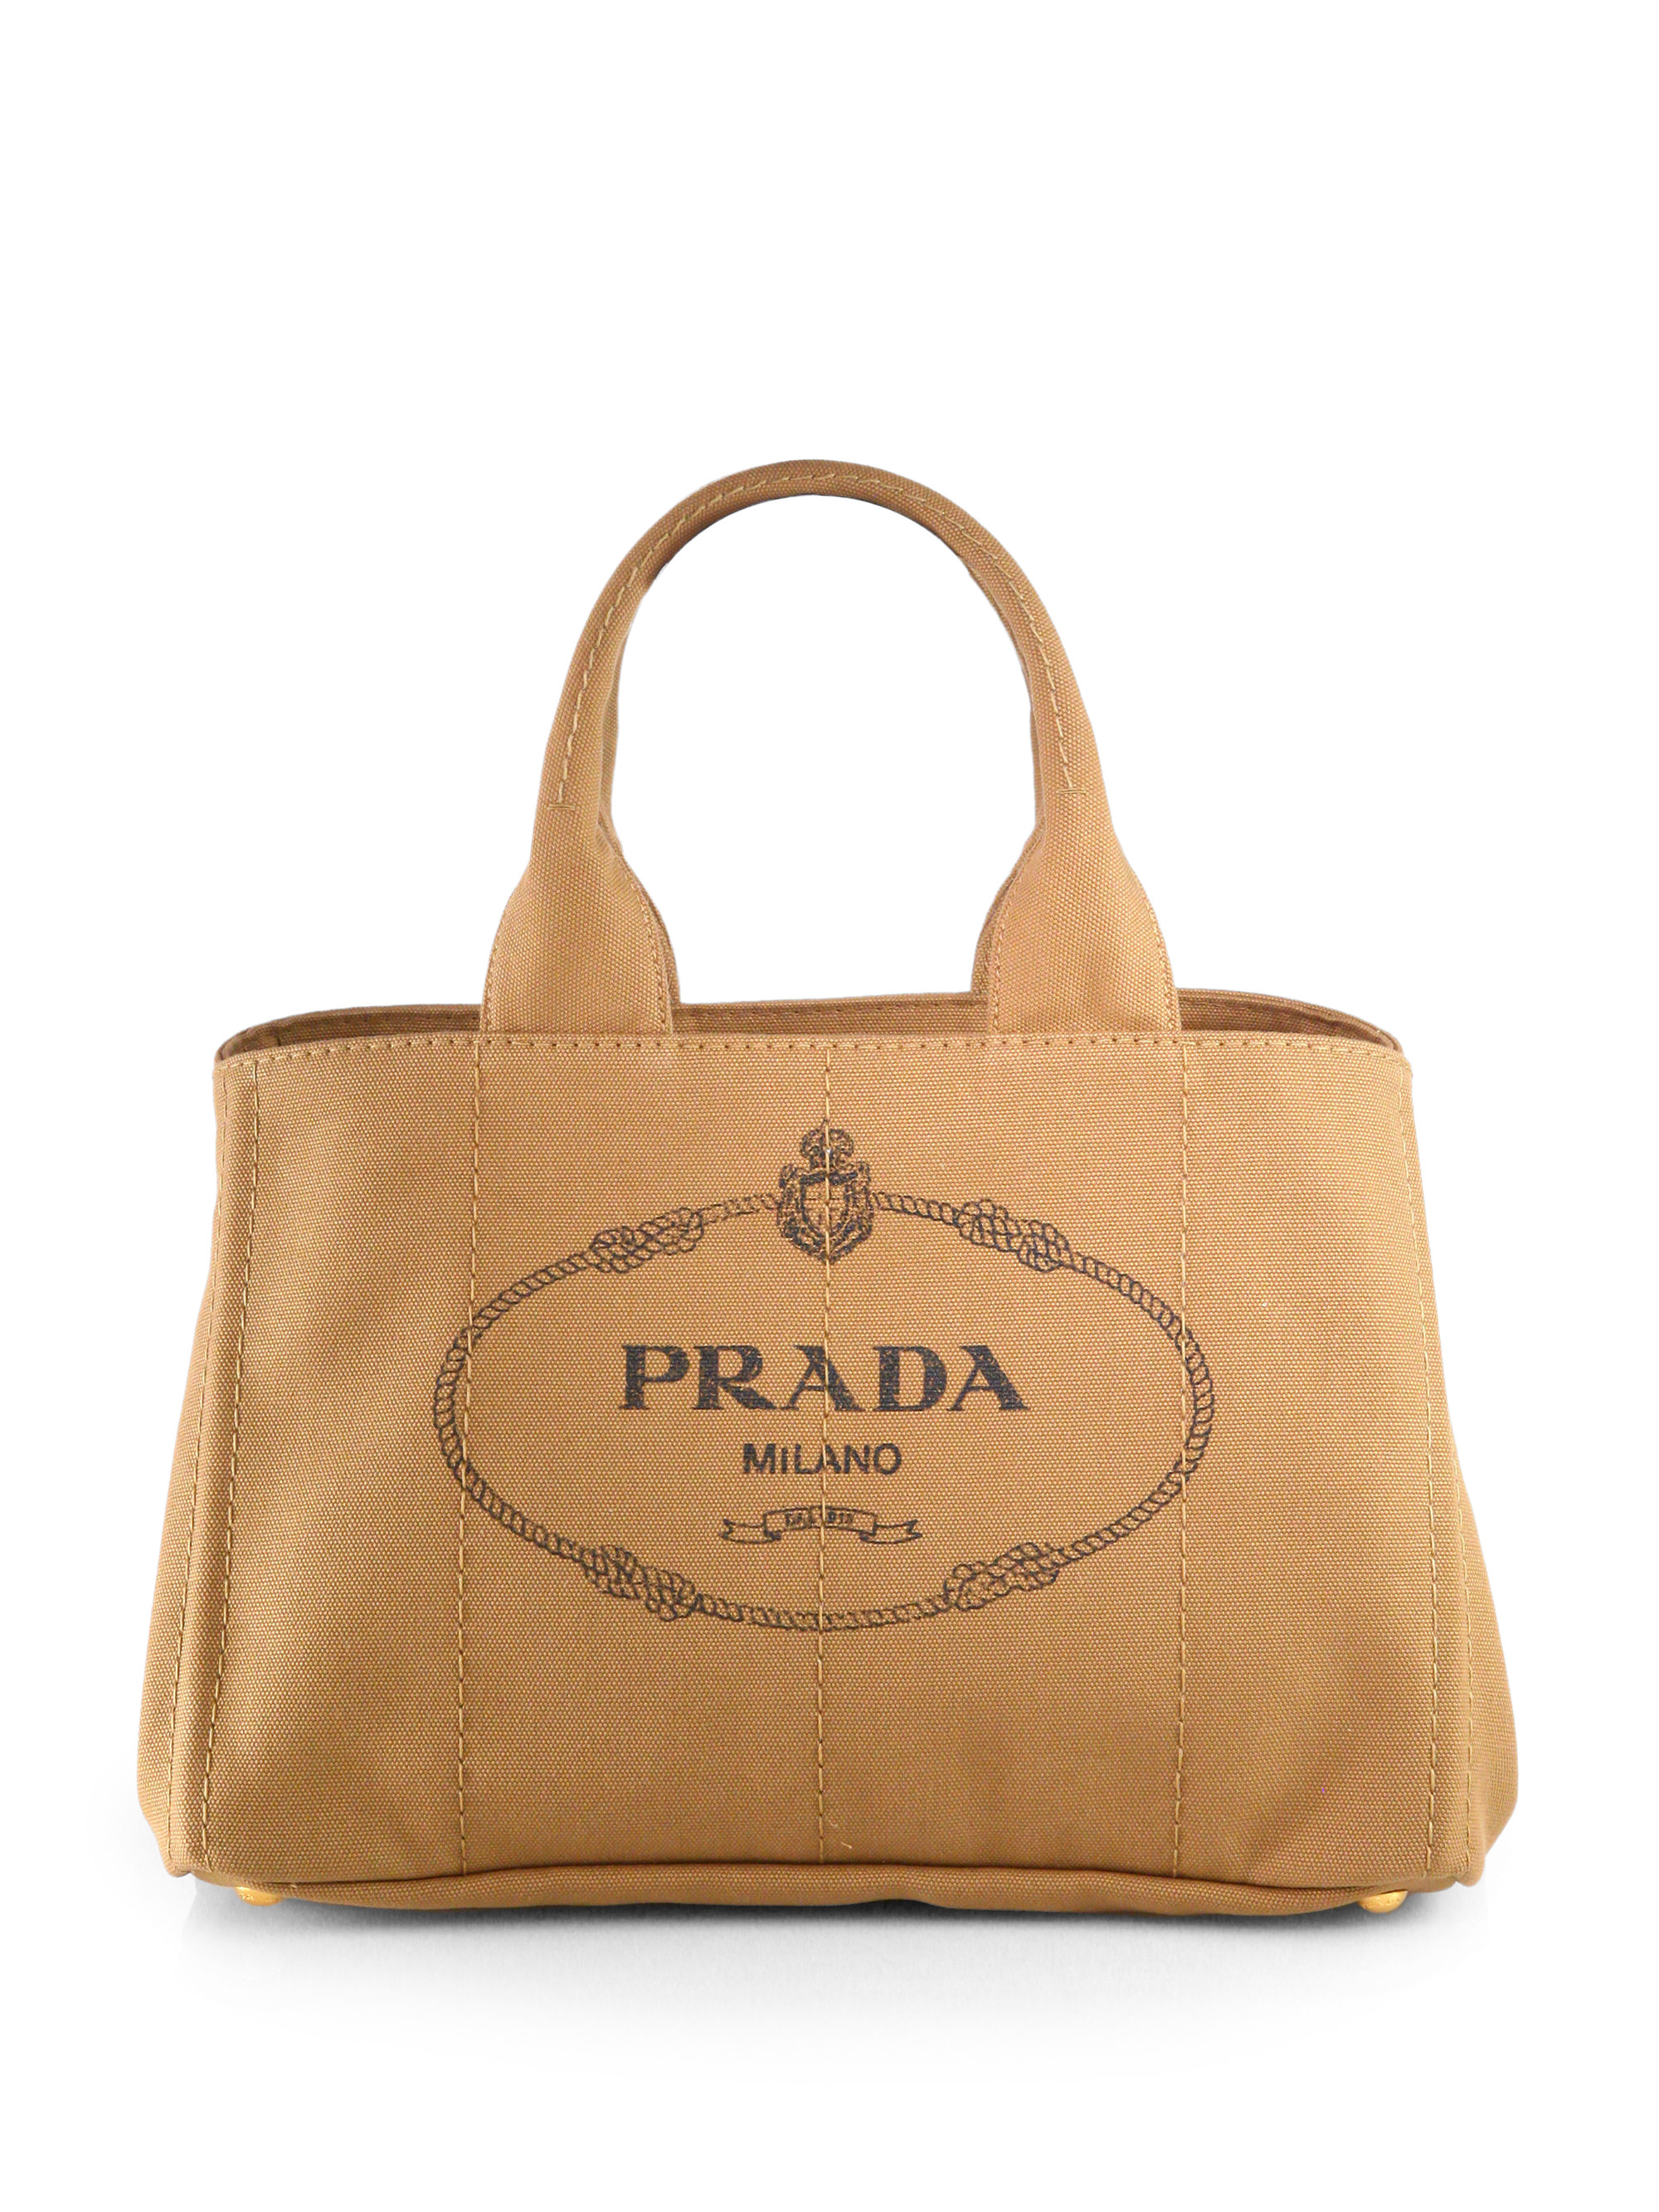 Prada Logo Printed Medium Canvas Tote in Brown (TABACCO-BROWN) | Lyst